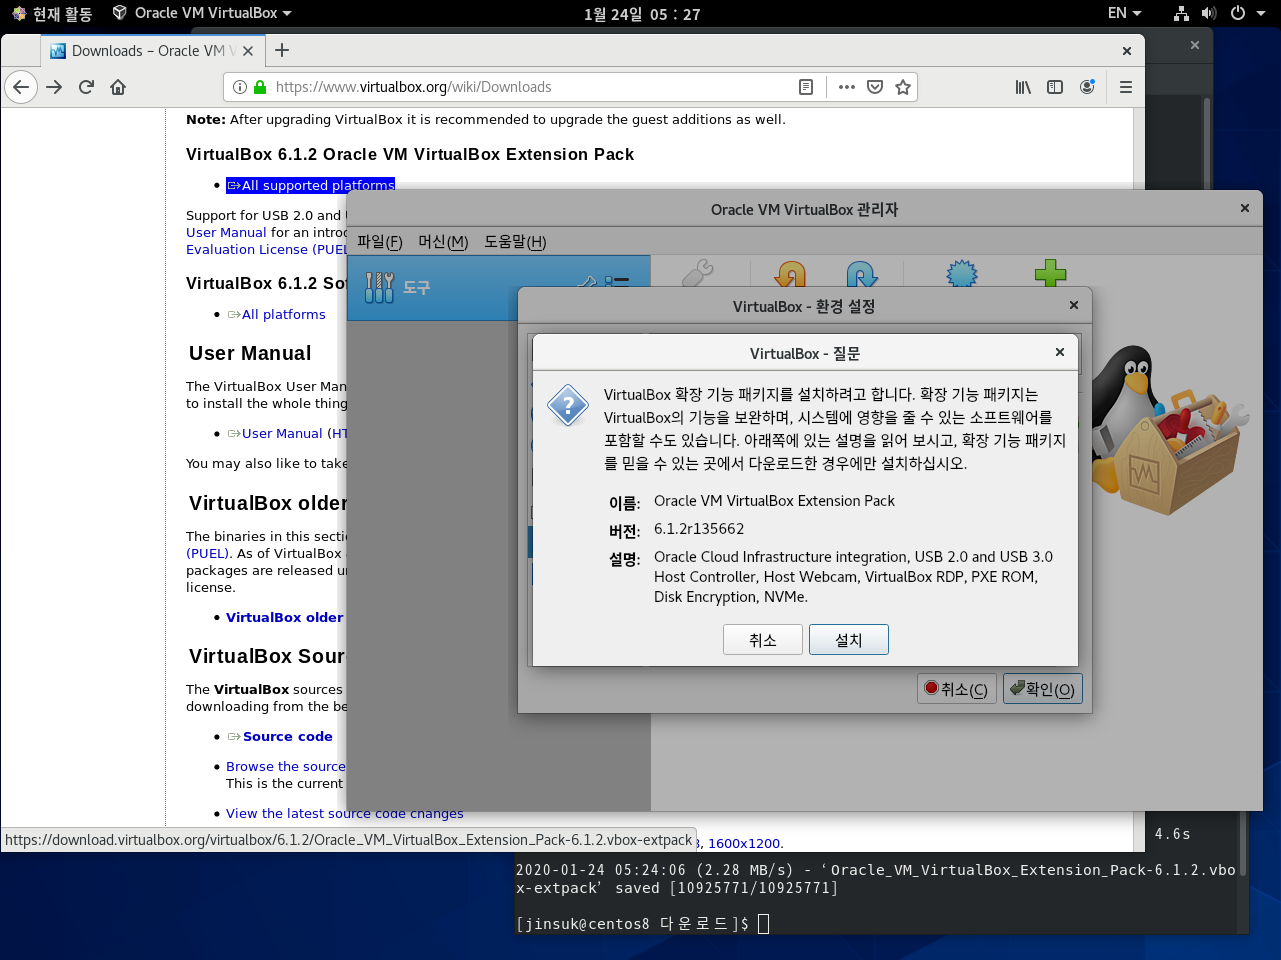 VirtualBox 6.1.2 Extension Pack install